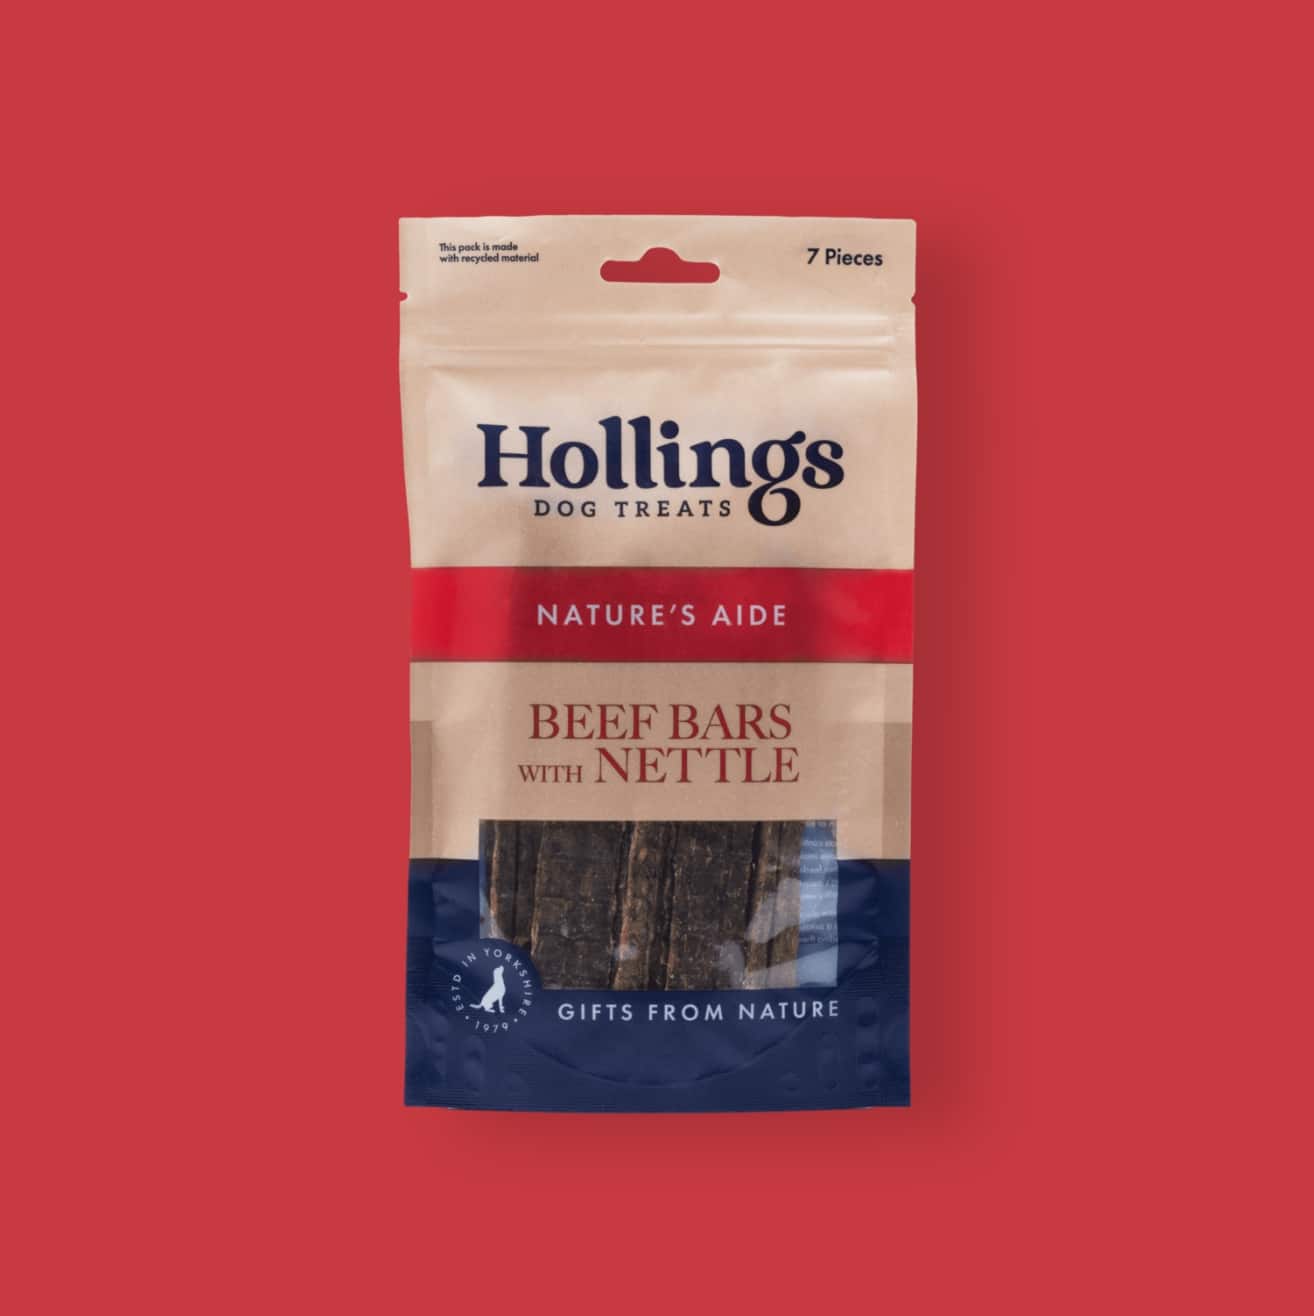 Hollings dog treats packaging design by Bluestone98